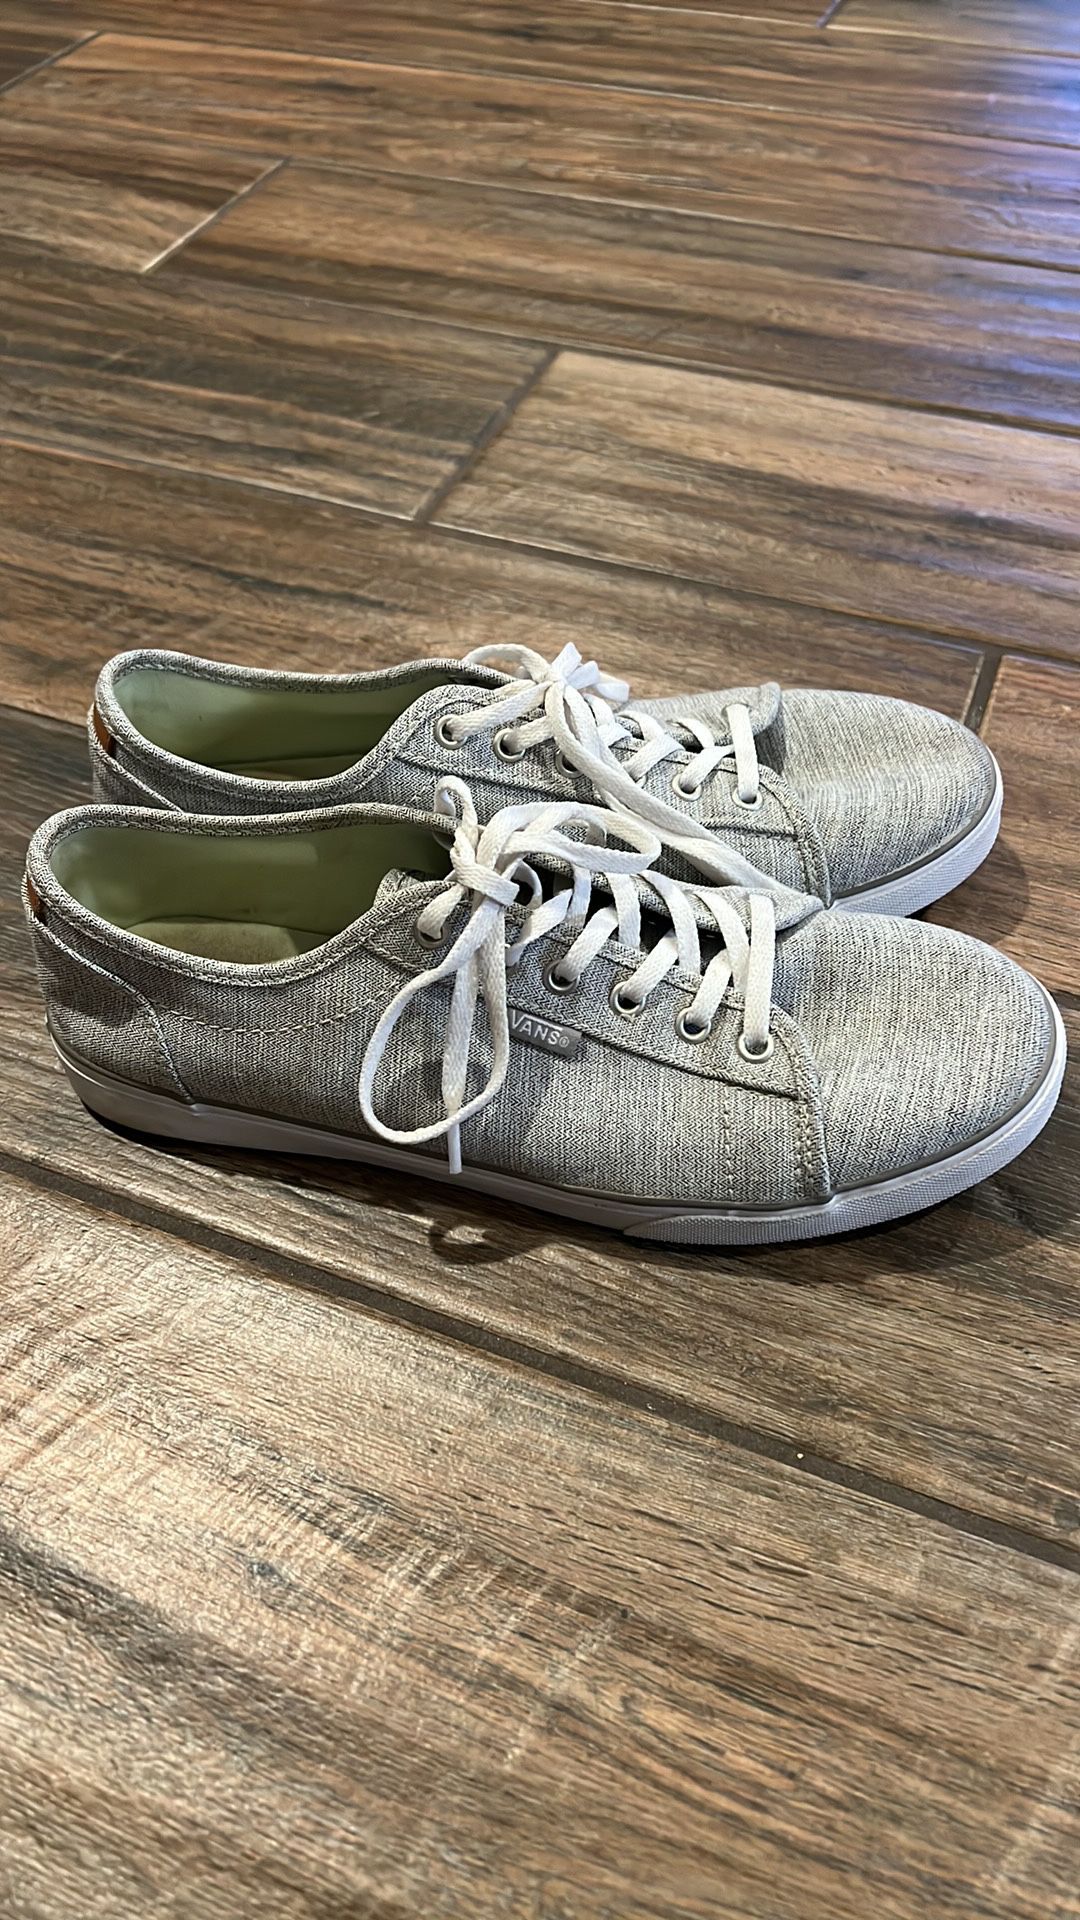 Vans Ortholite low skate canvas grey laced shoes size 8 1/2 women’s